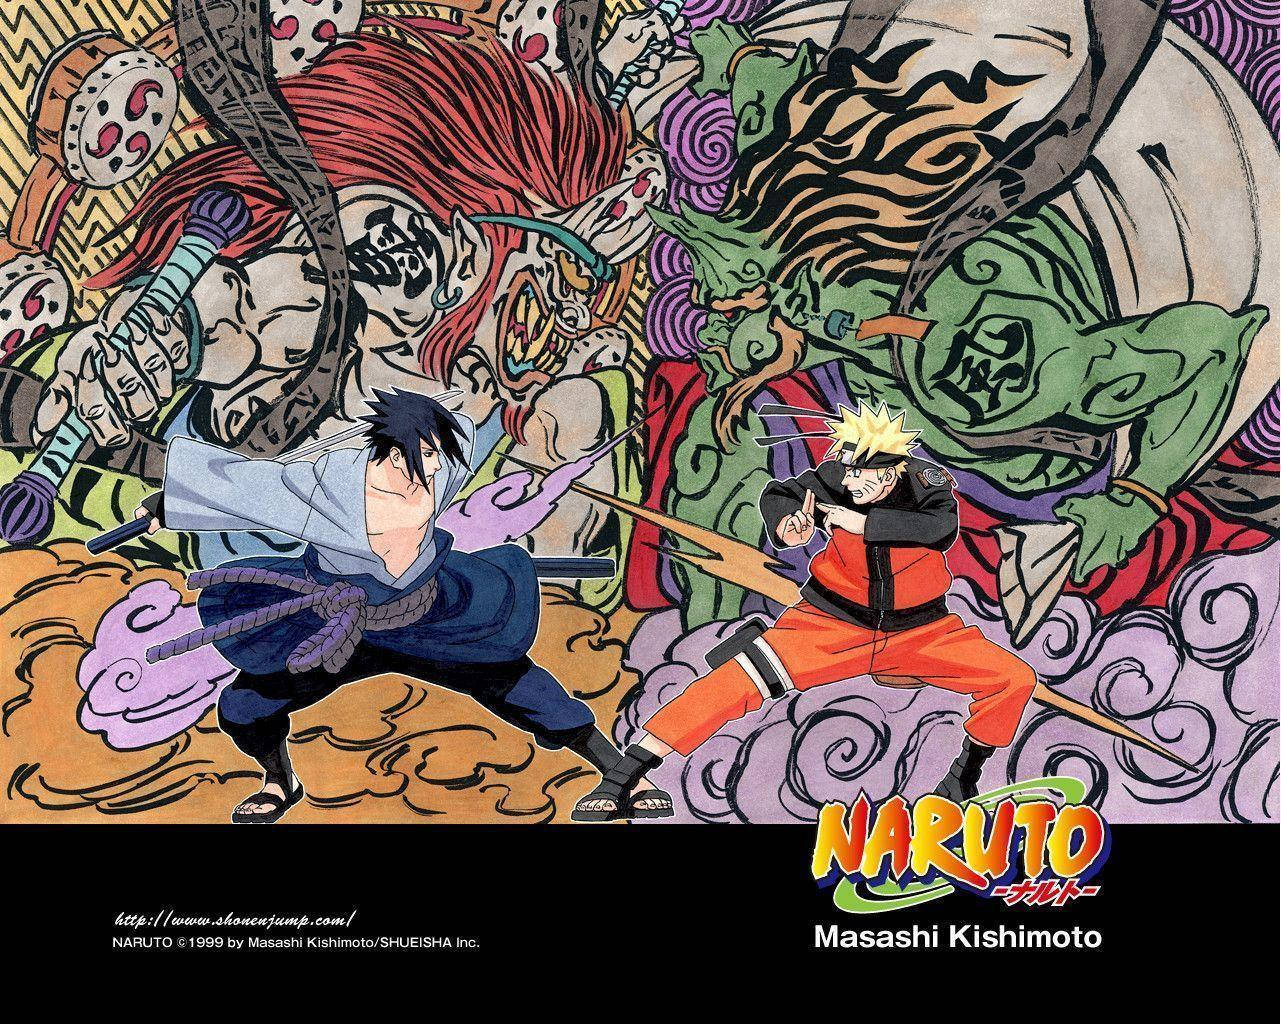 Manga Art Of Naruto Vs Sasuke Background